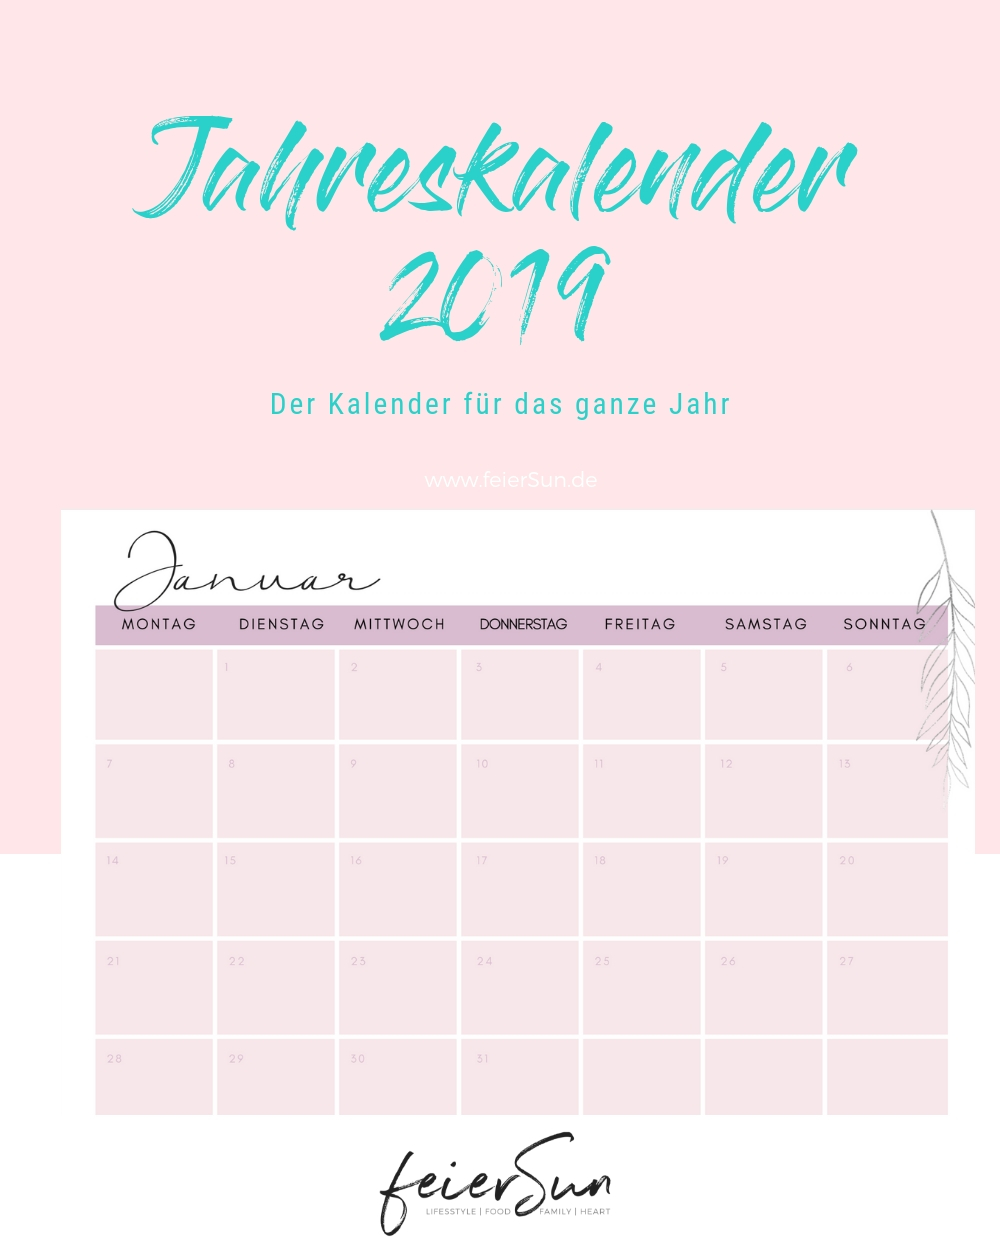 Kalender | Jahreskalender 2019